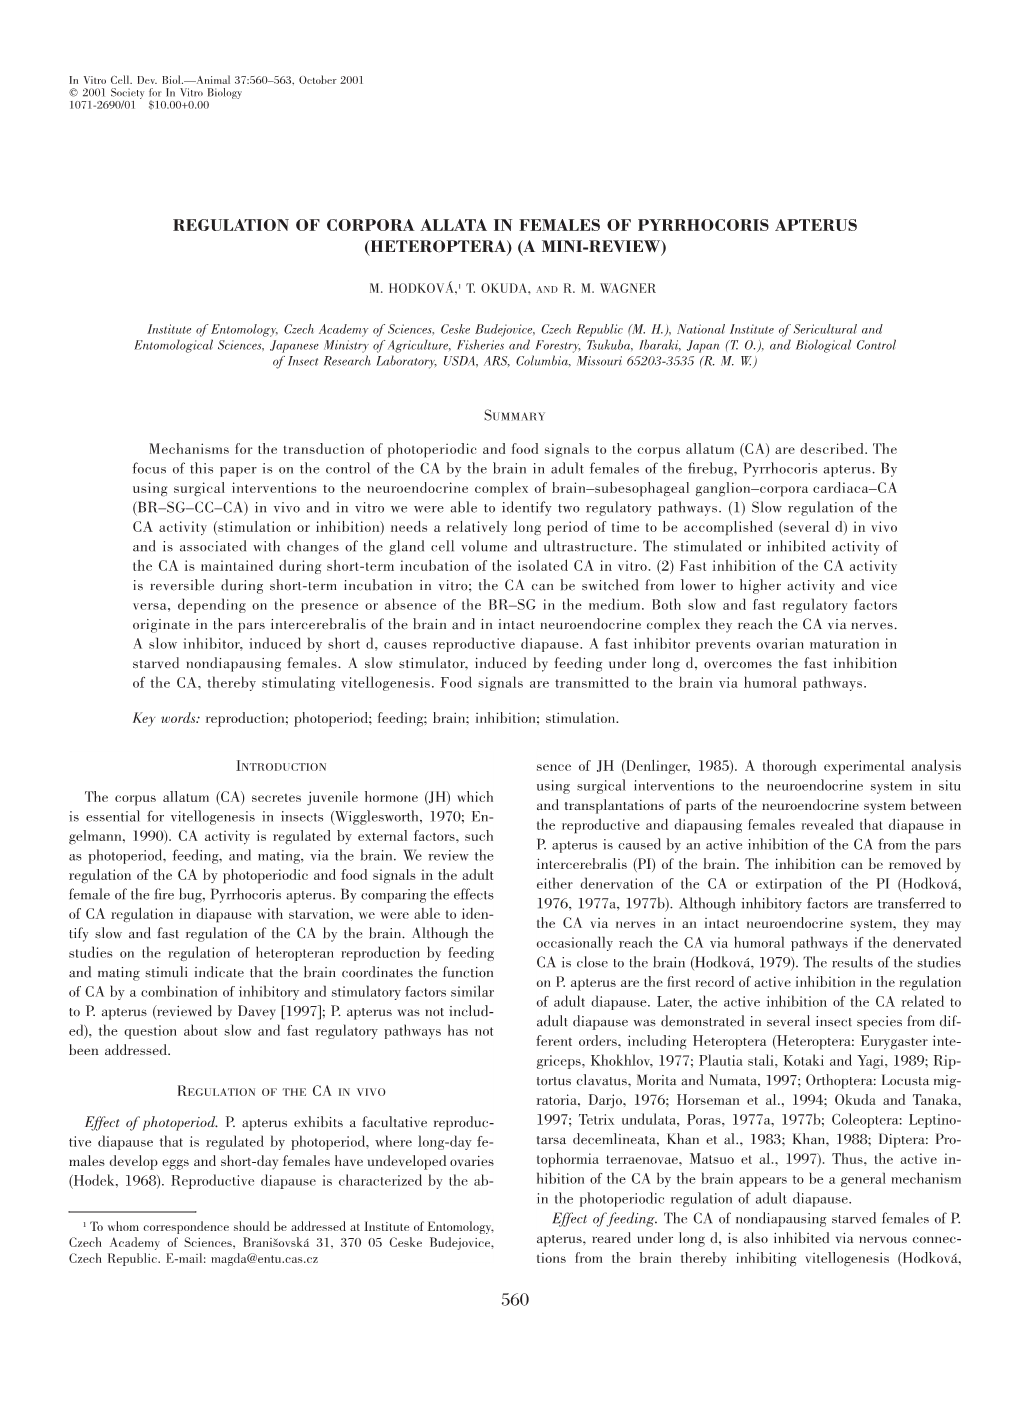 Regulation of Corpora Allata in Females of Pyrrhocoris Apterus (Heteroptera) (A Mini-Review)